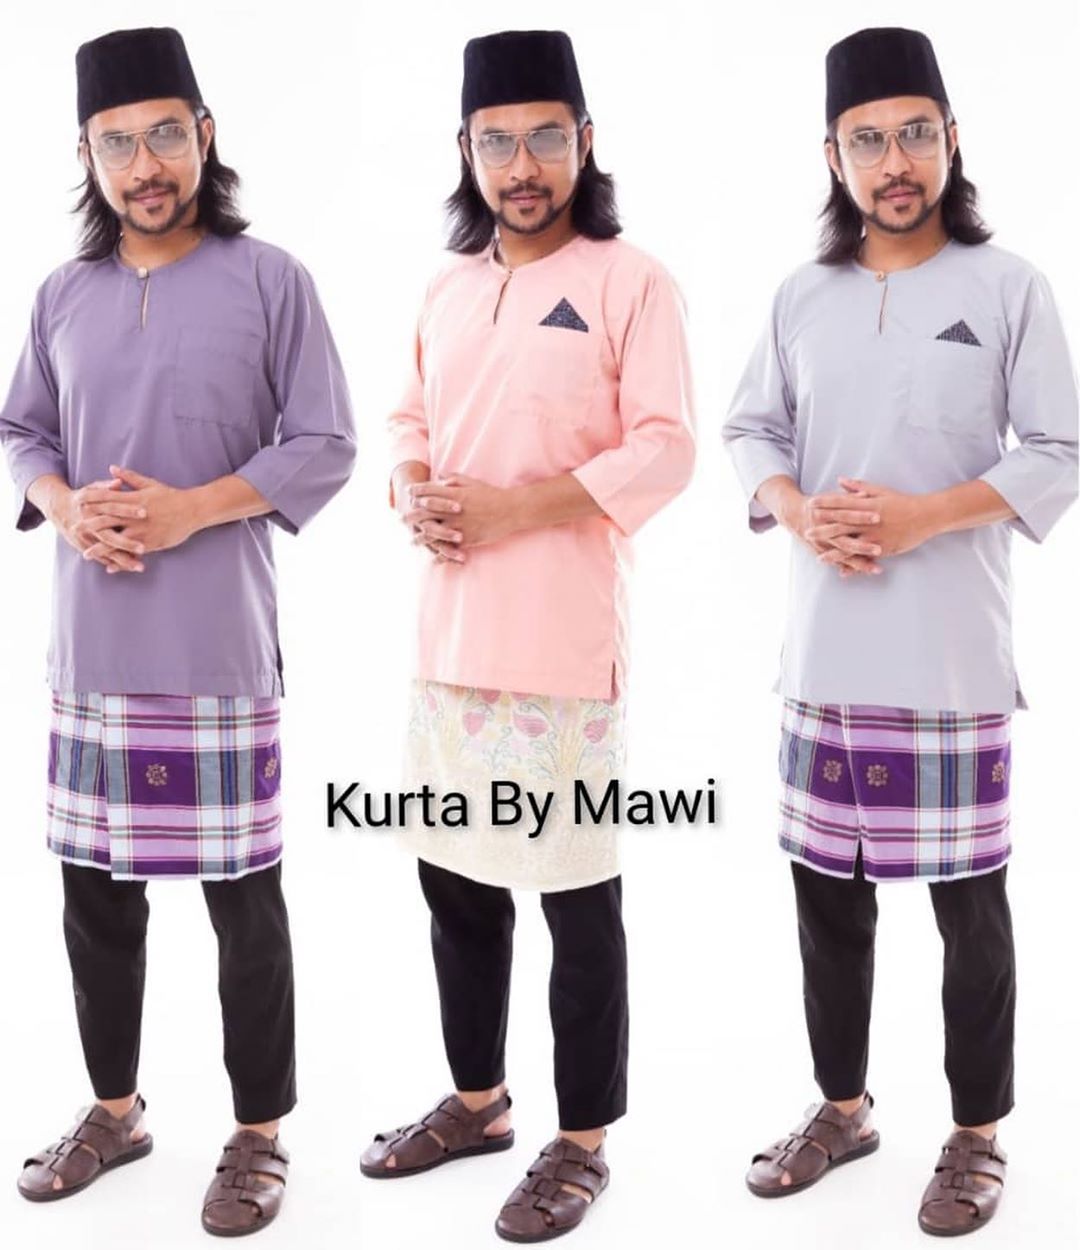 Mawi jual kurta, bukan baju Melayu teluk belanga… “Saya tak fikir nak